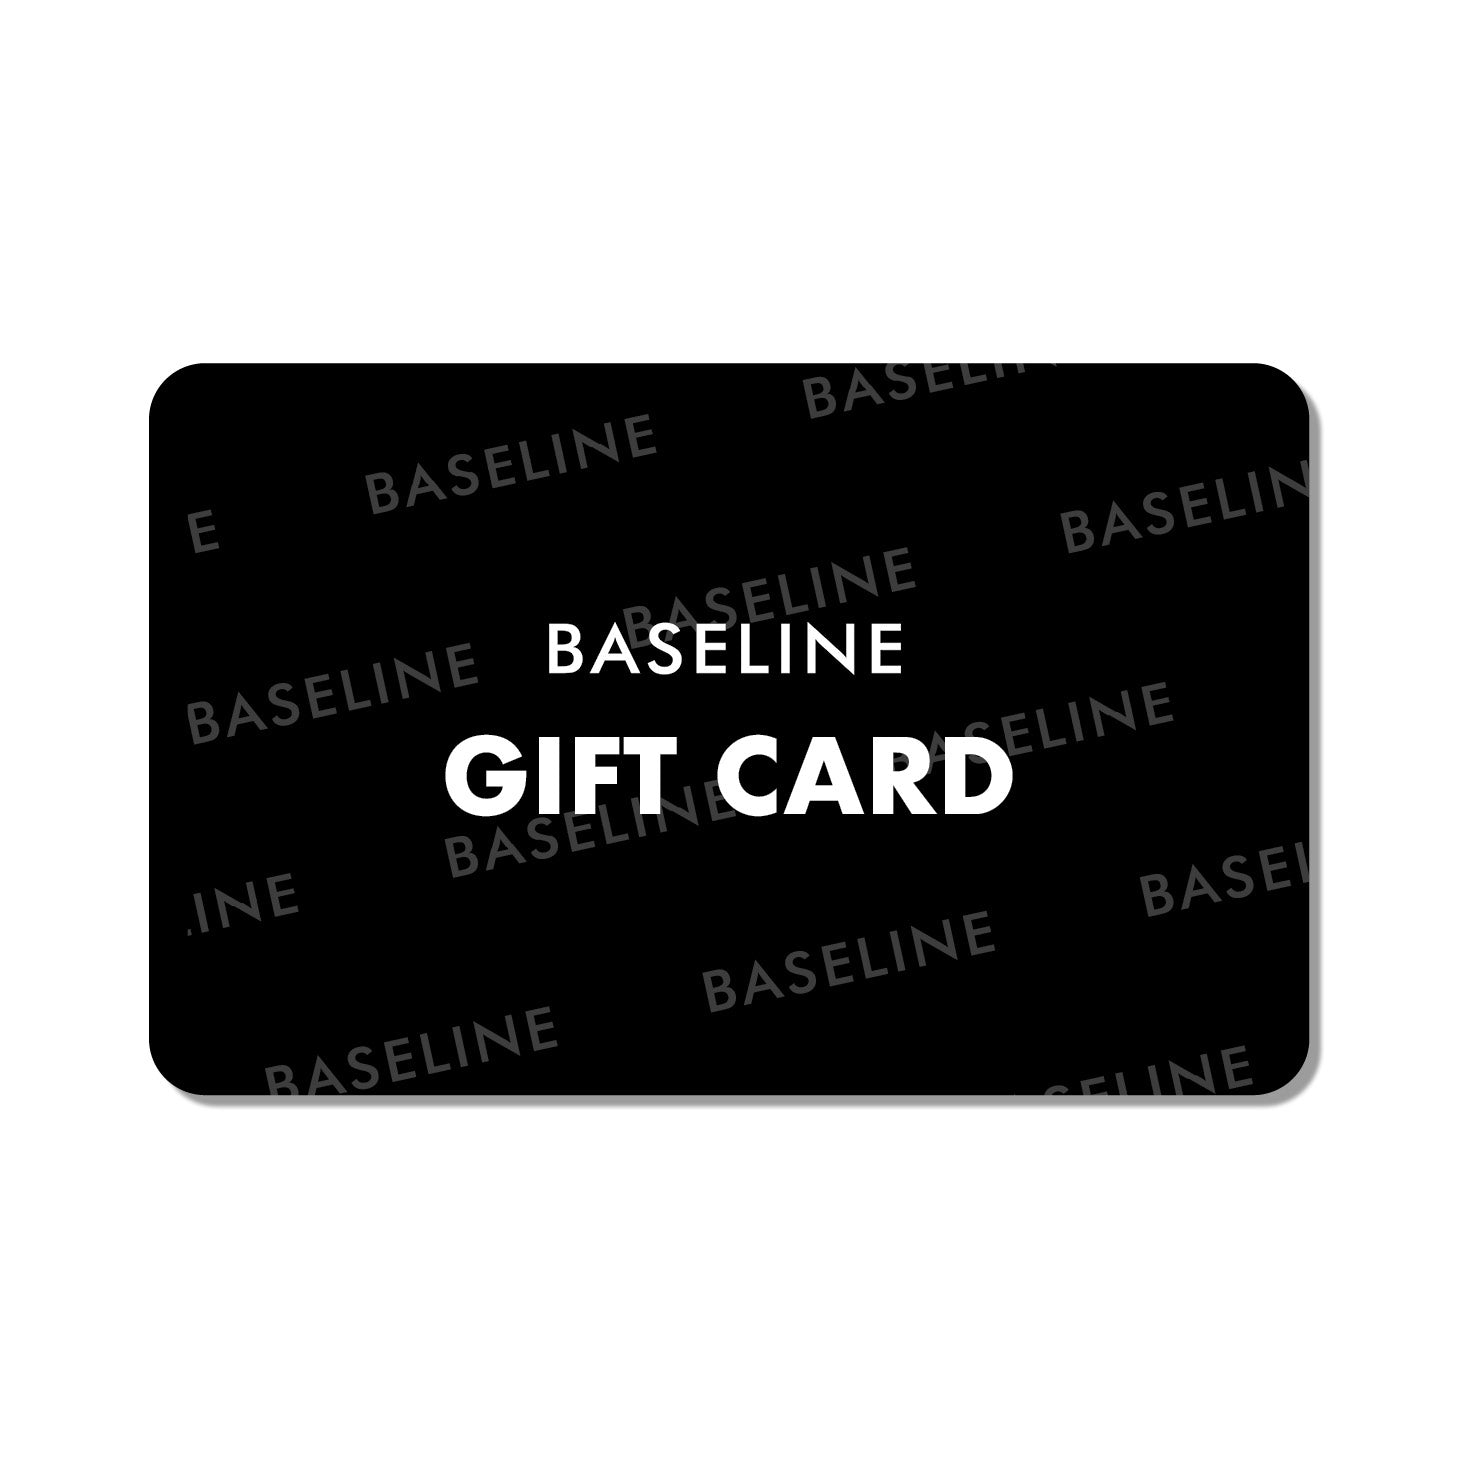 BASELINE Gift Card